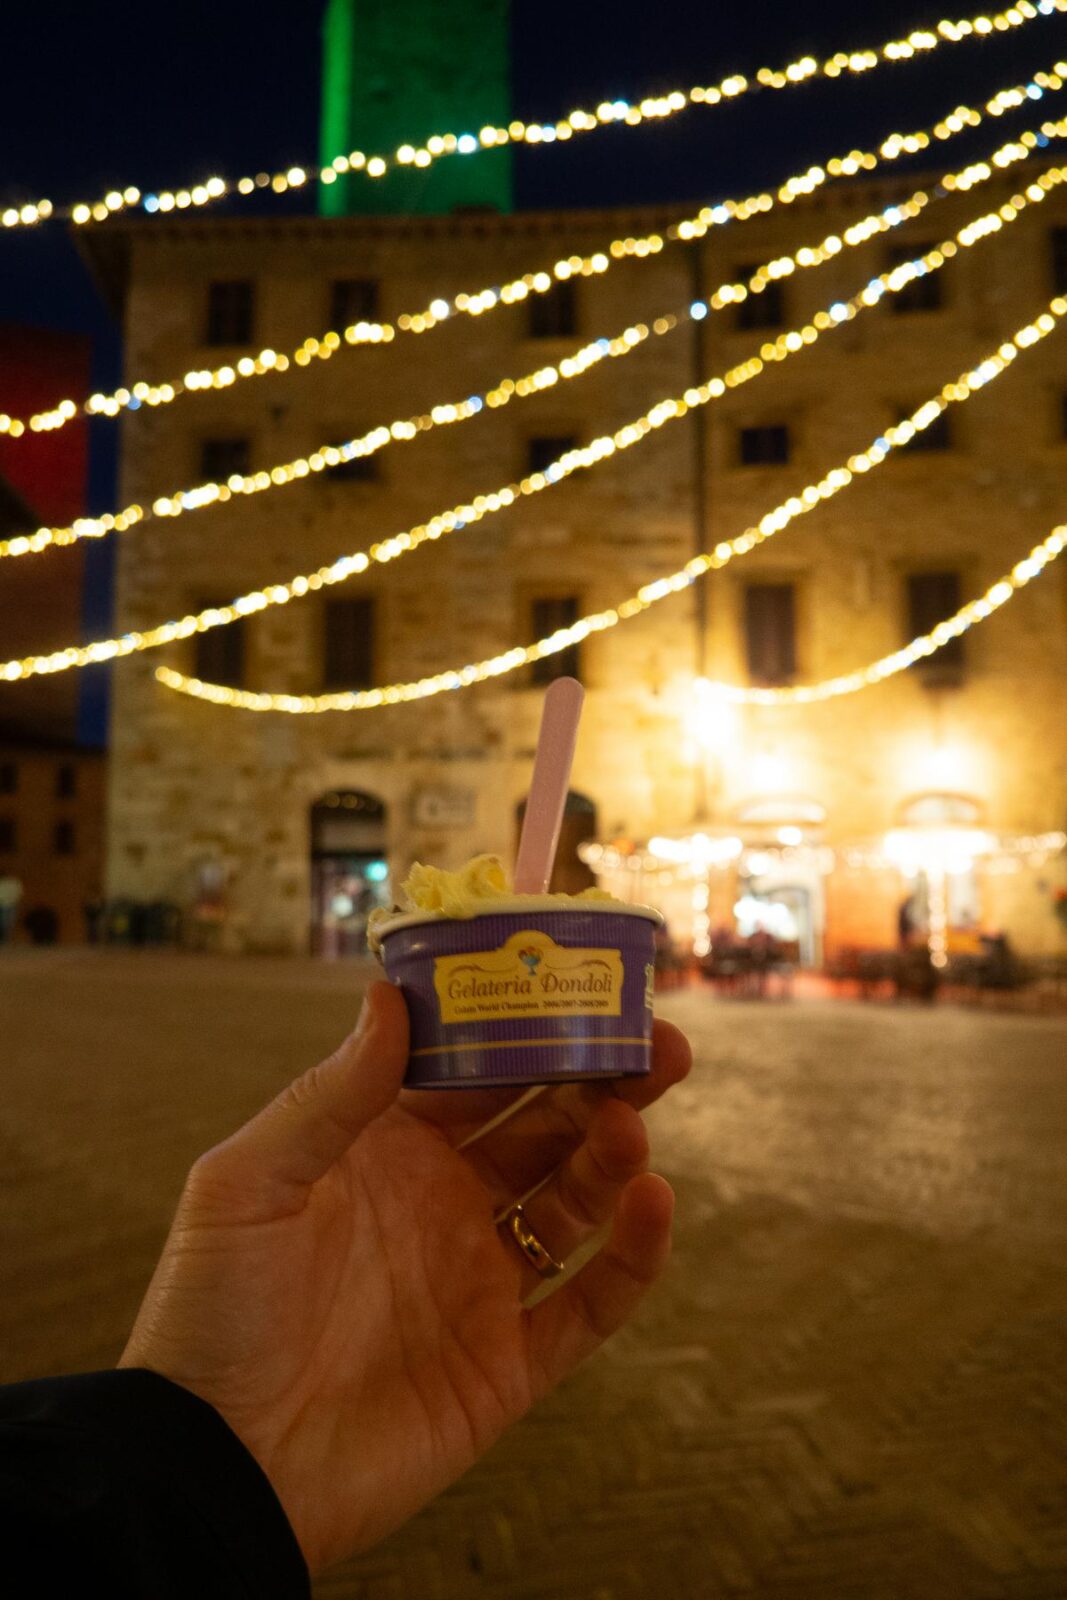 Enjoying Gelateria Dondoli gelato at night in San Gimignano Piazza